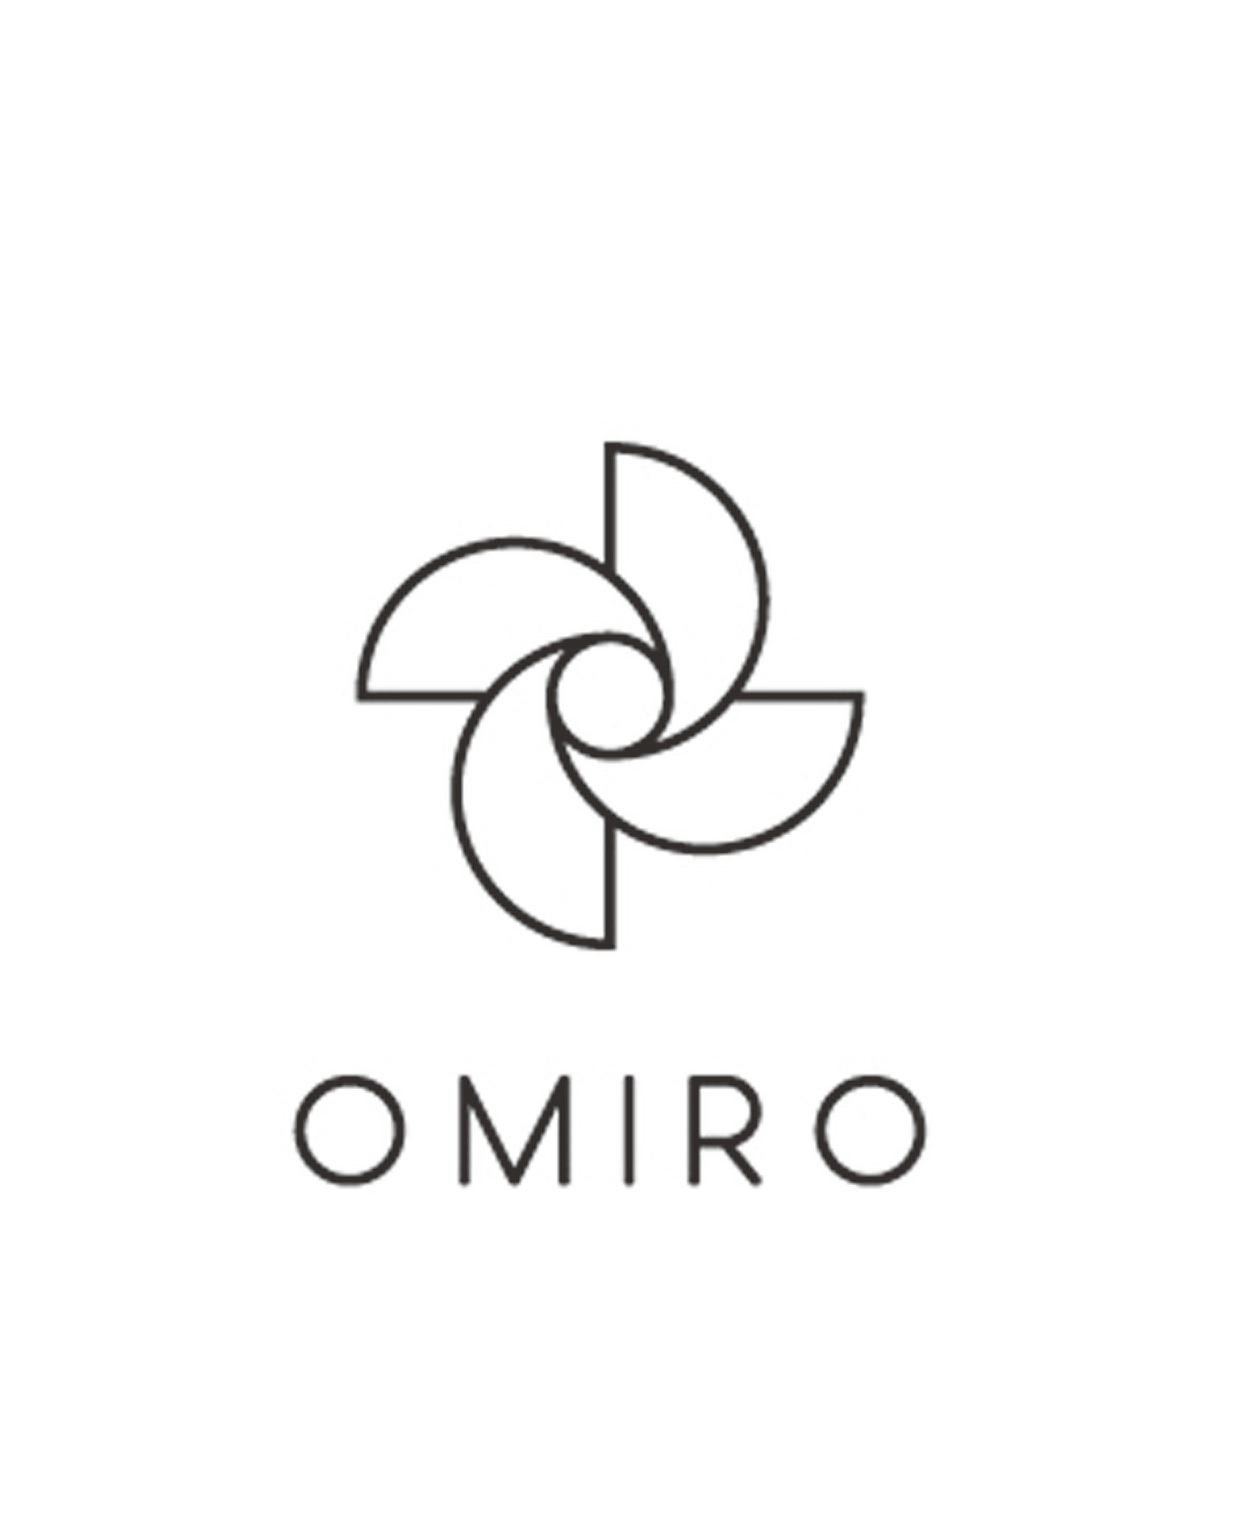 OMIRO - Shenzhen BeiJiAo Electronic Commerce Co., Ltd. Trademark ...